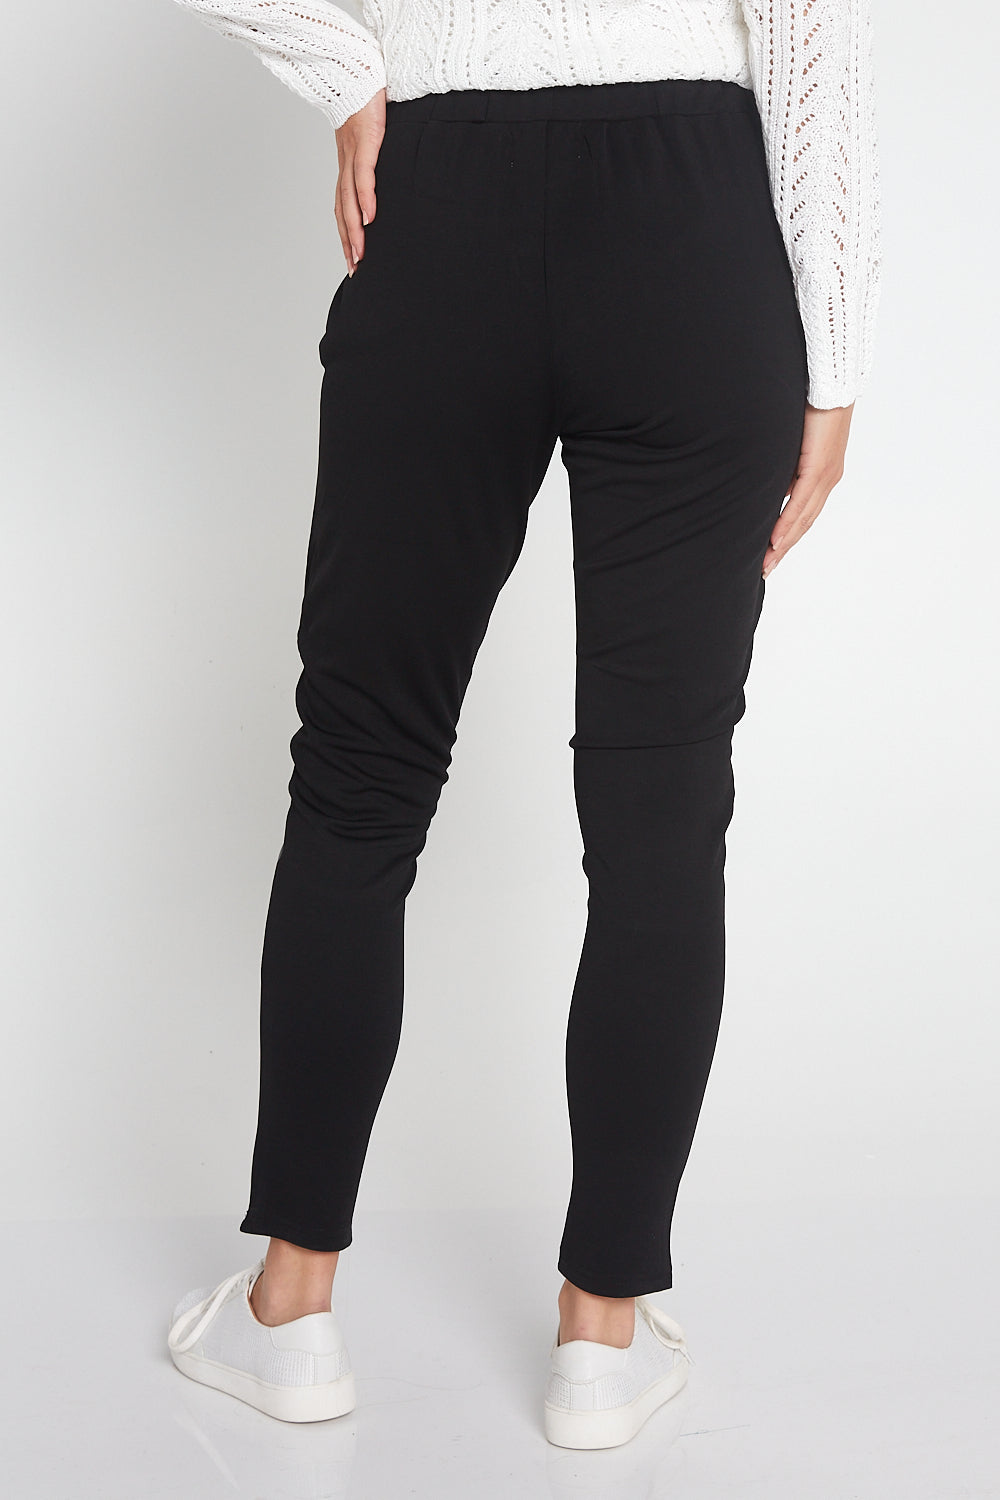 Leela Faux Leather Pants - Black